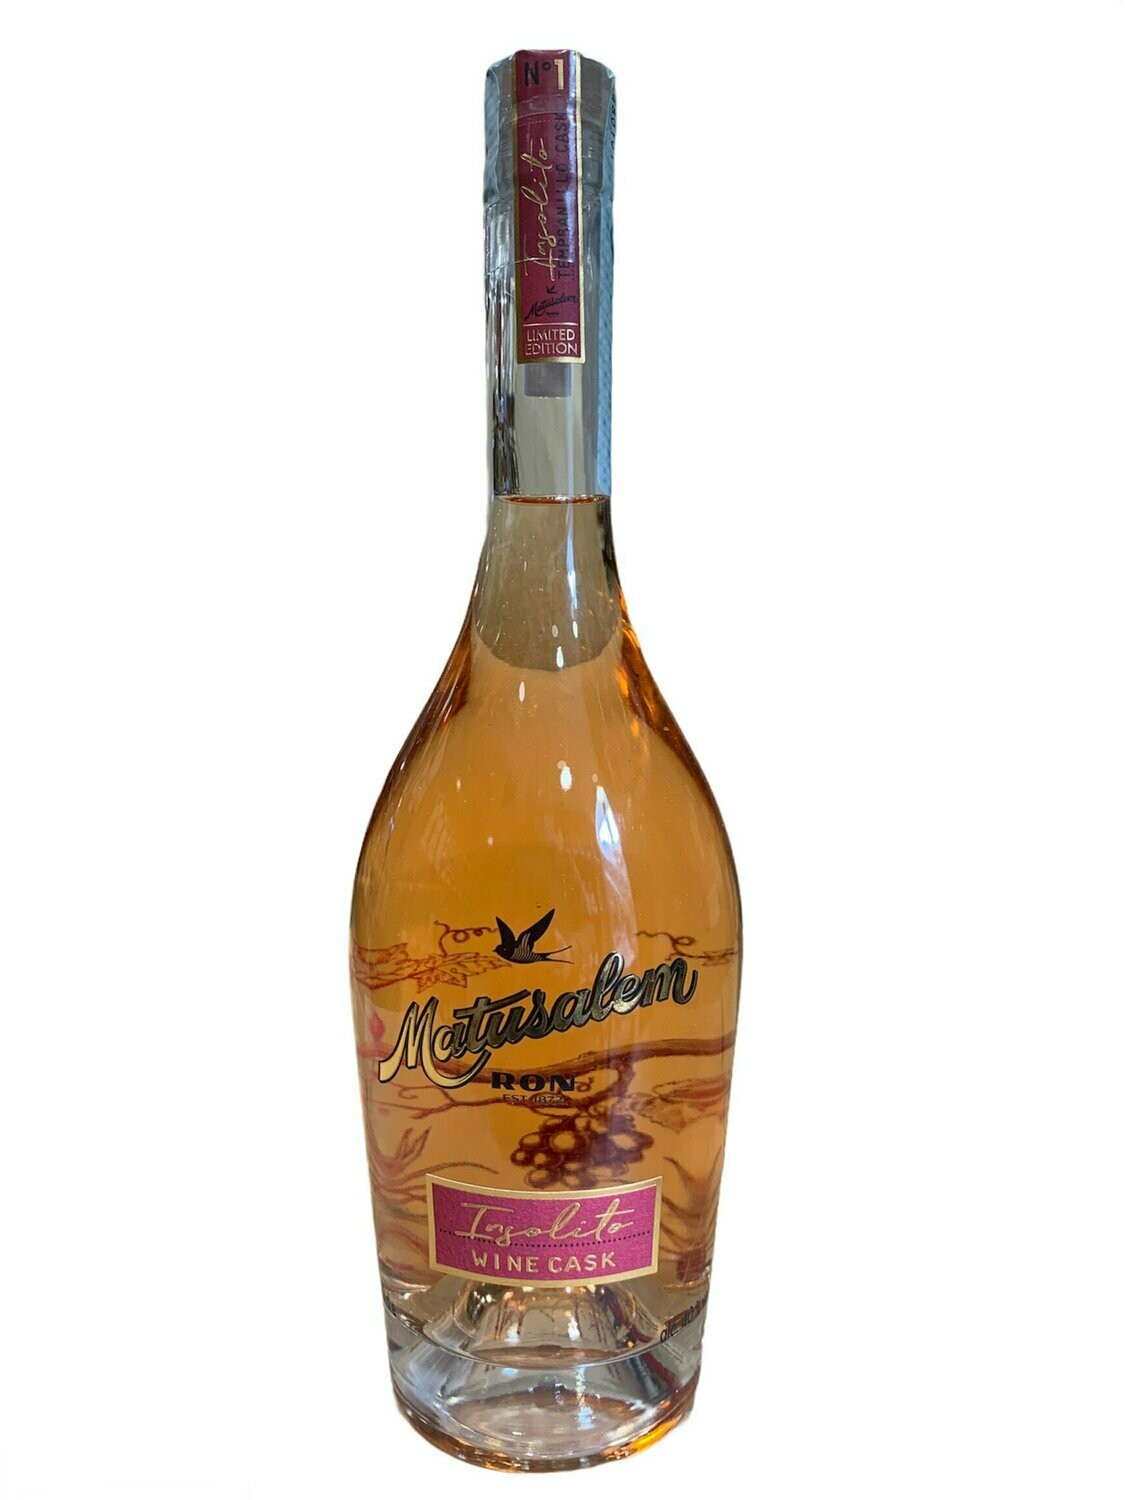 Matusalem Rum "Insolito" Wine Cask 70cl 40%